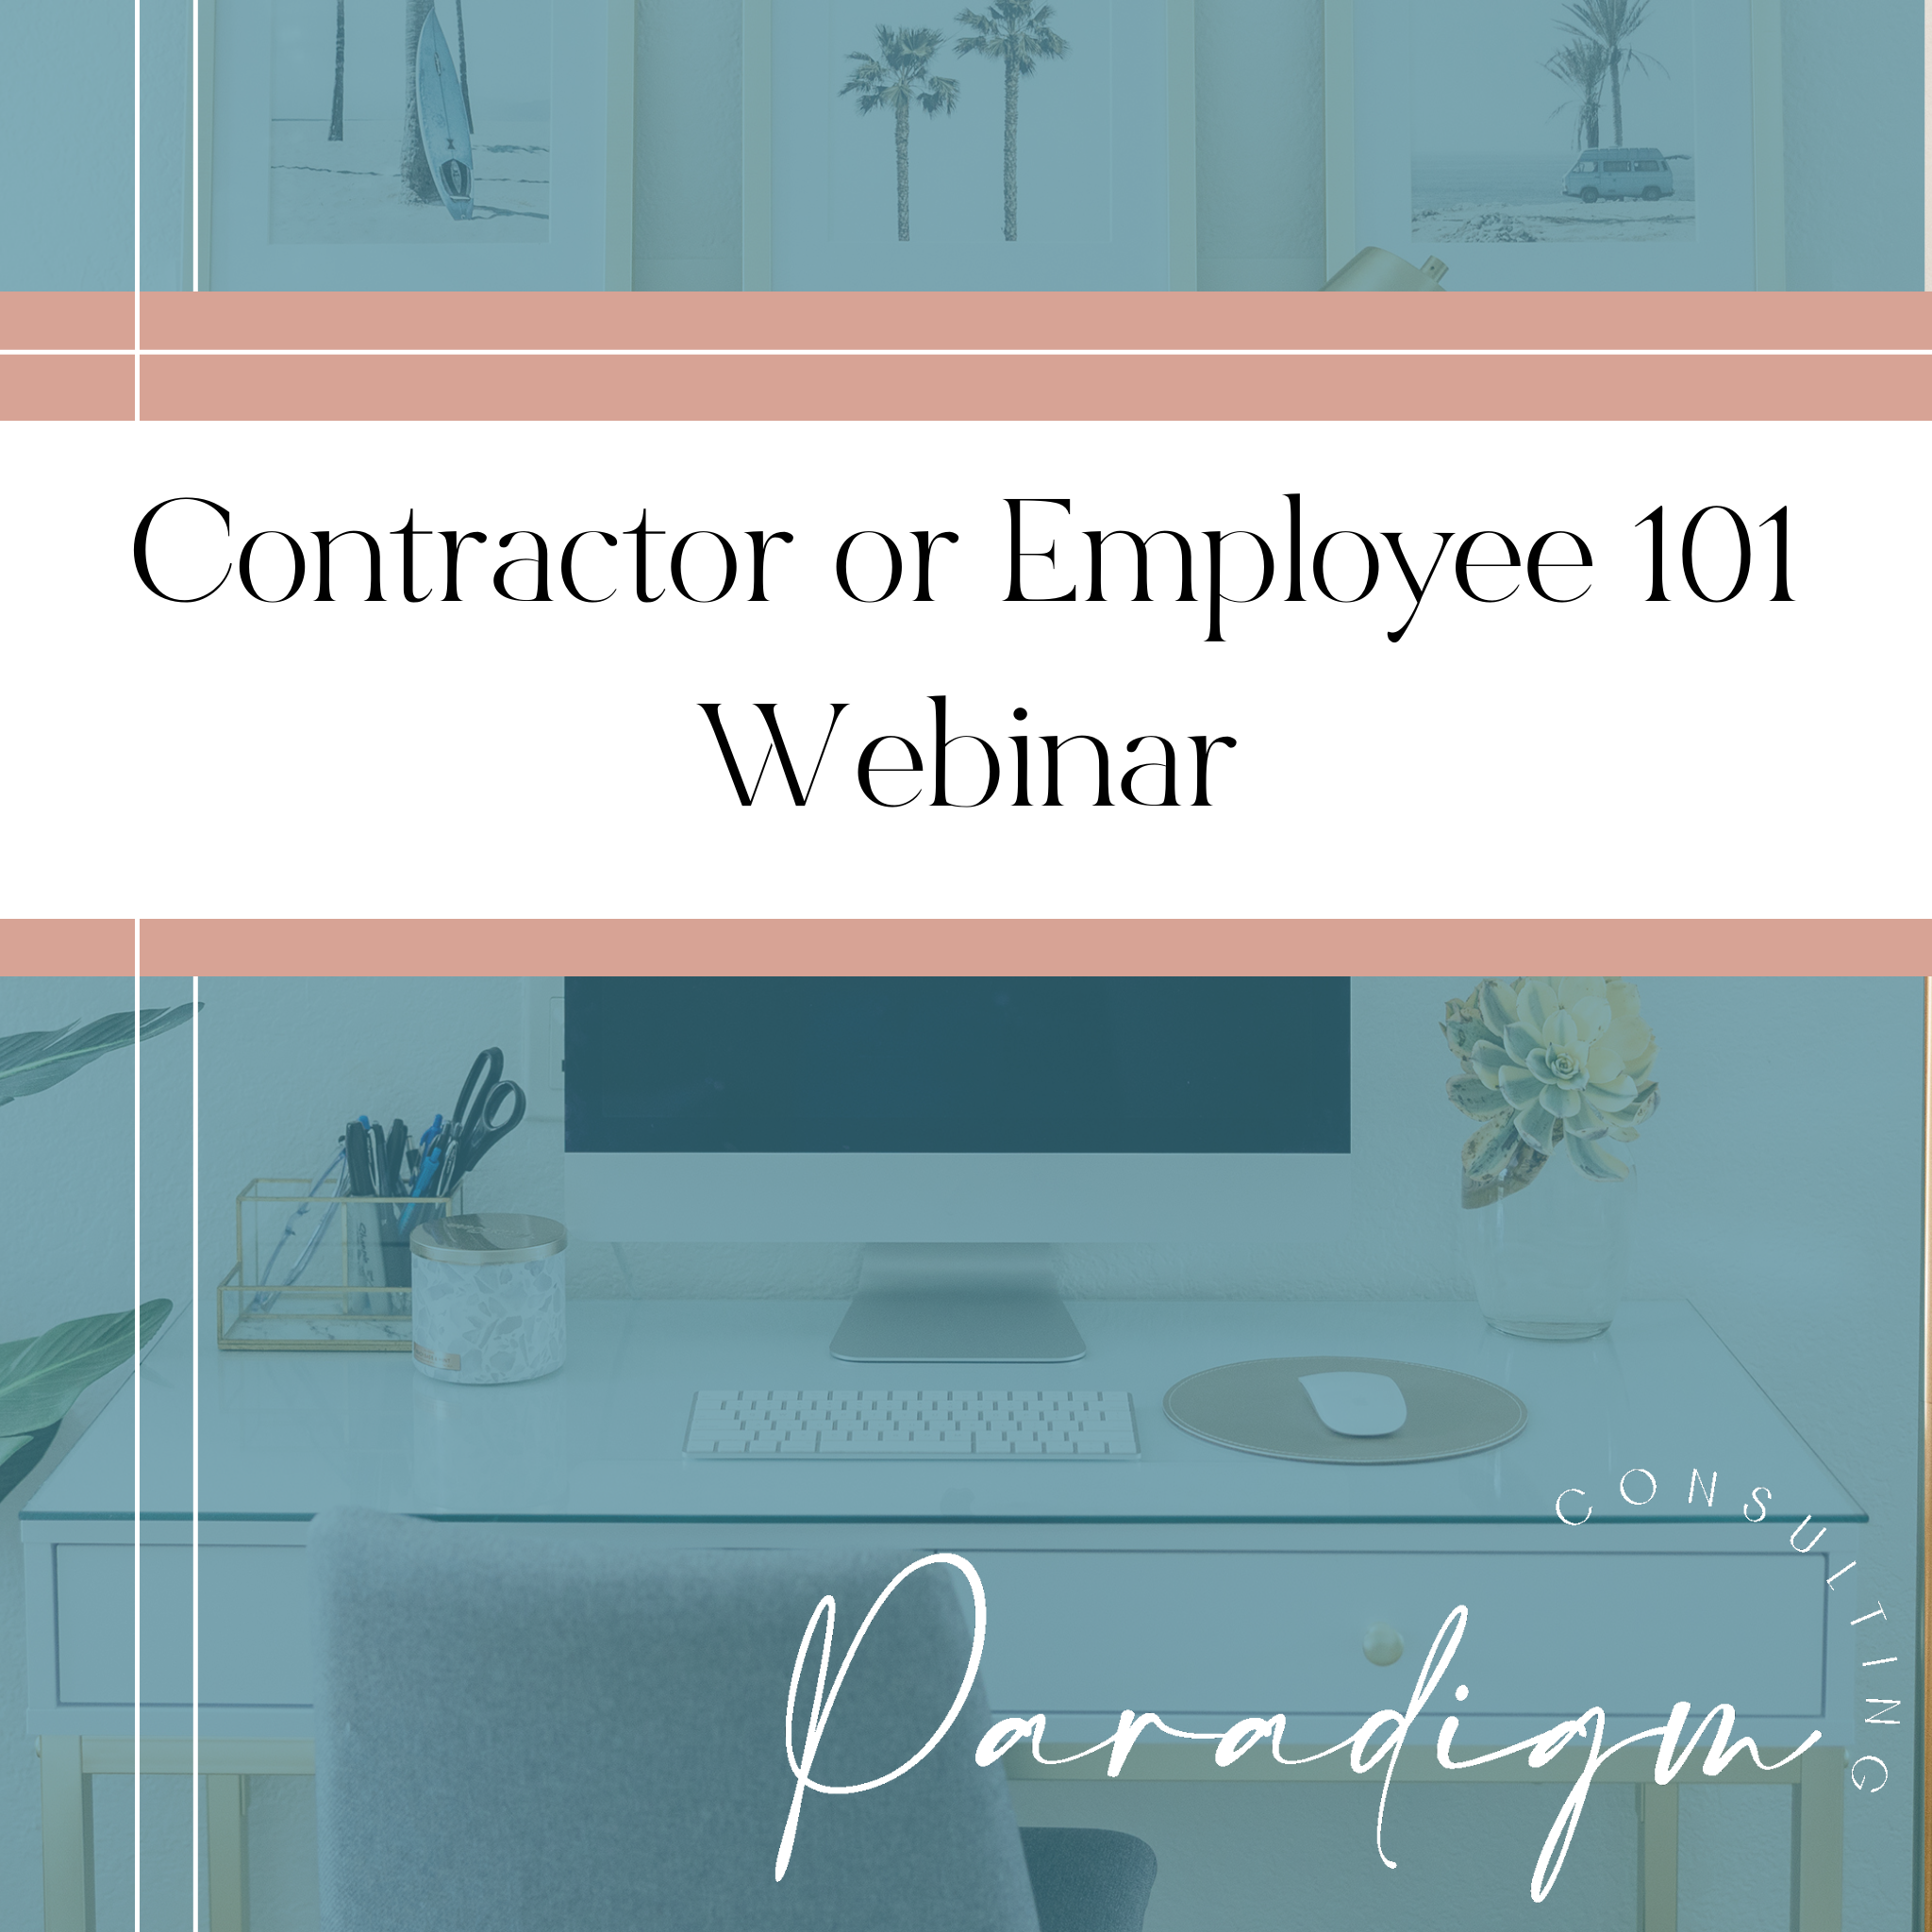 Contractor or Employee 101 Webinar - Paradigm Consulting